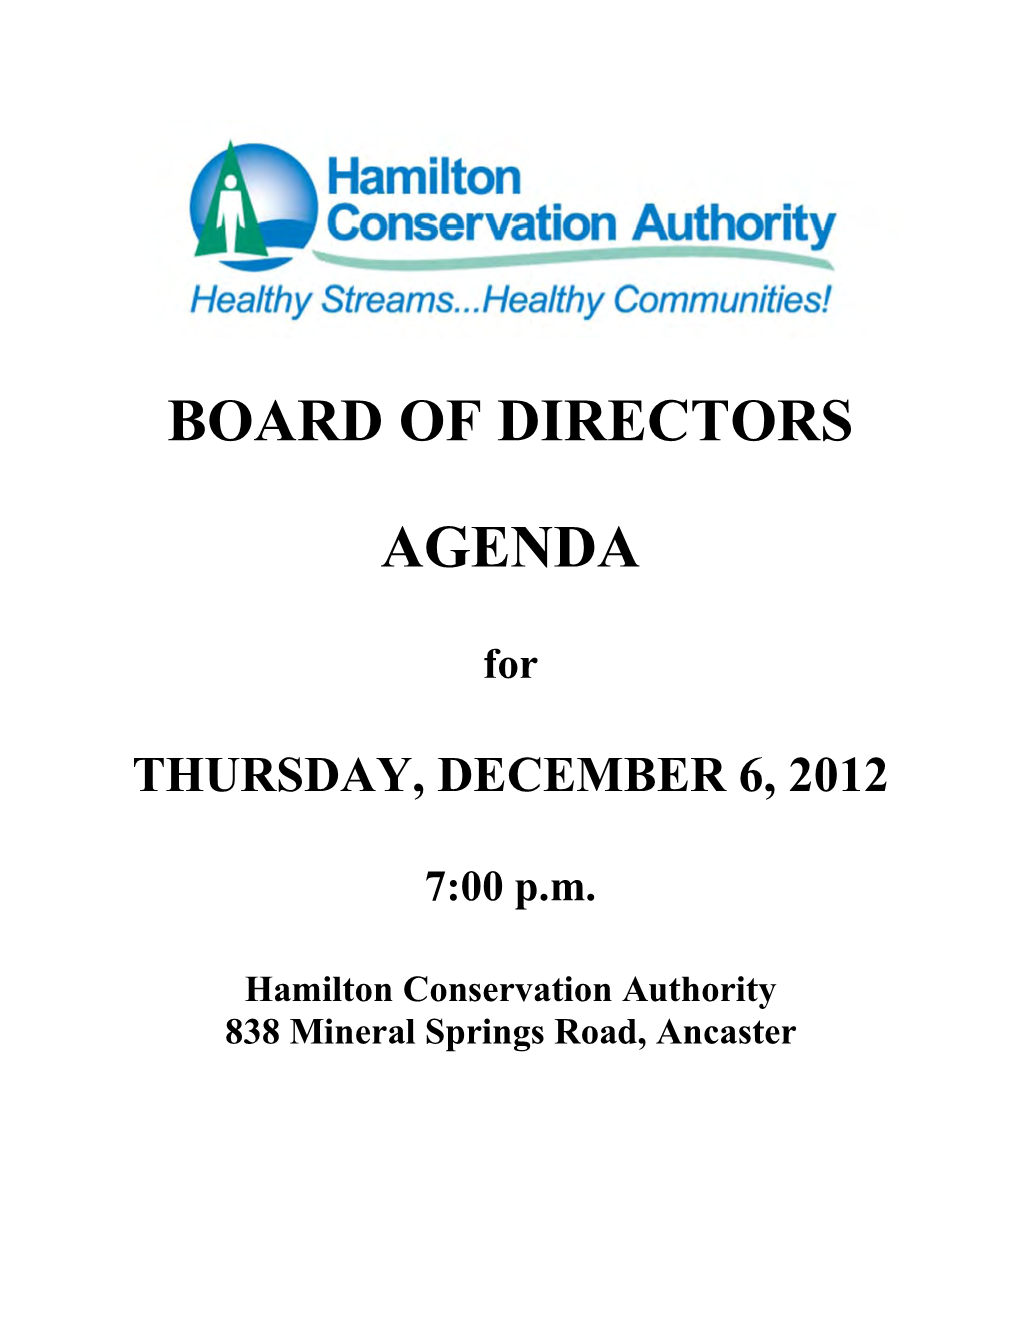 Board of Directors Agenda